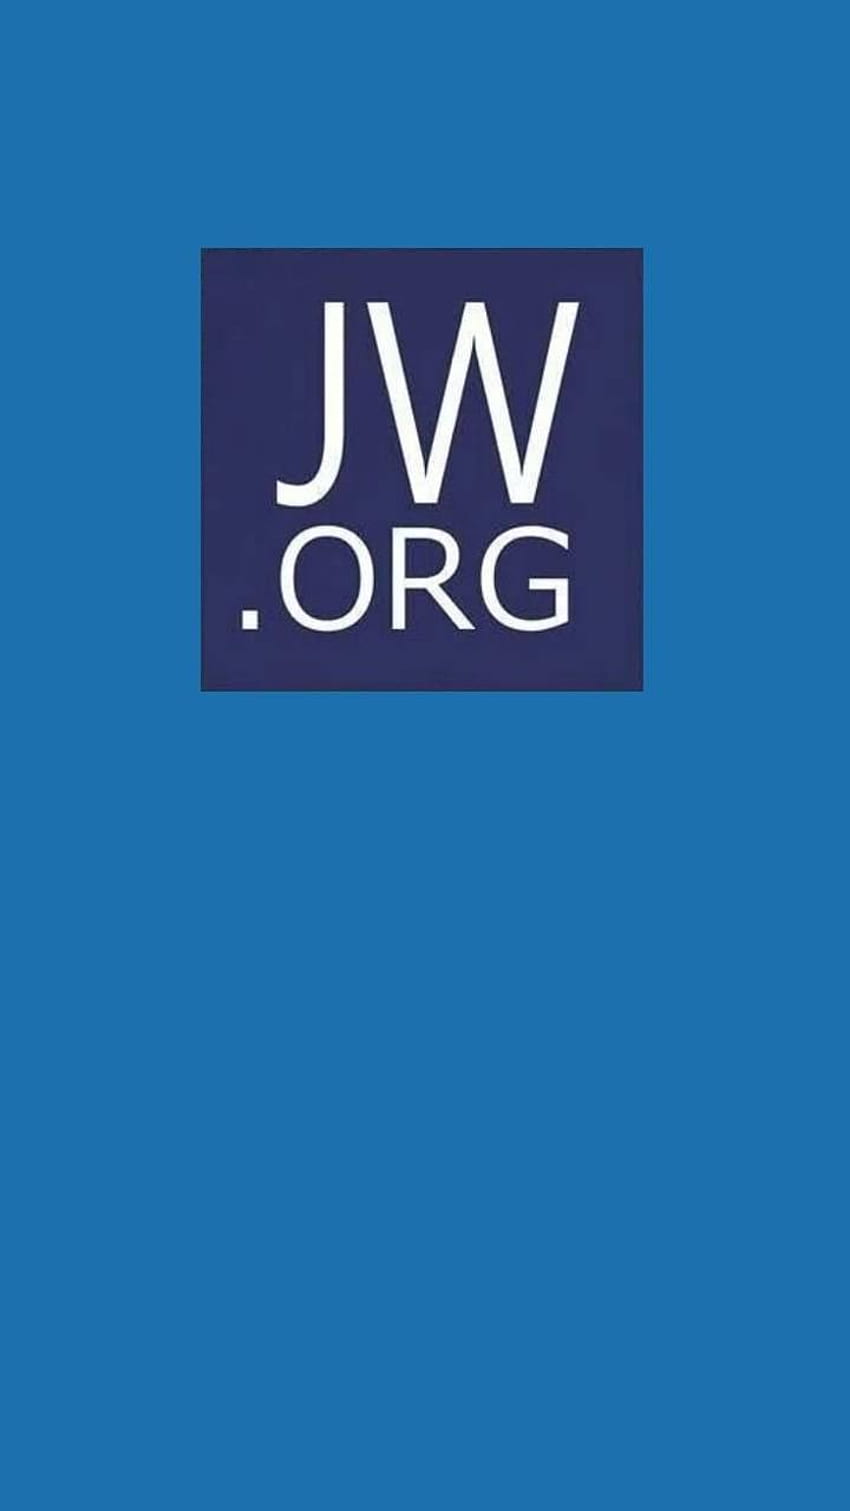 JW, JW.ORG Fond d'écran de téléphone HD